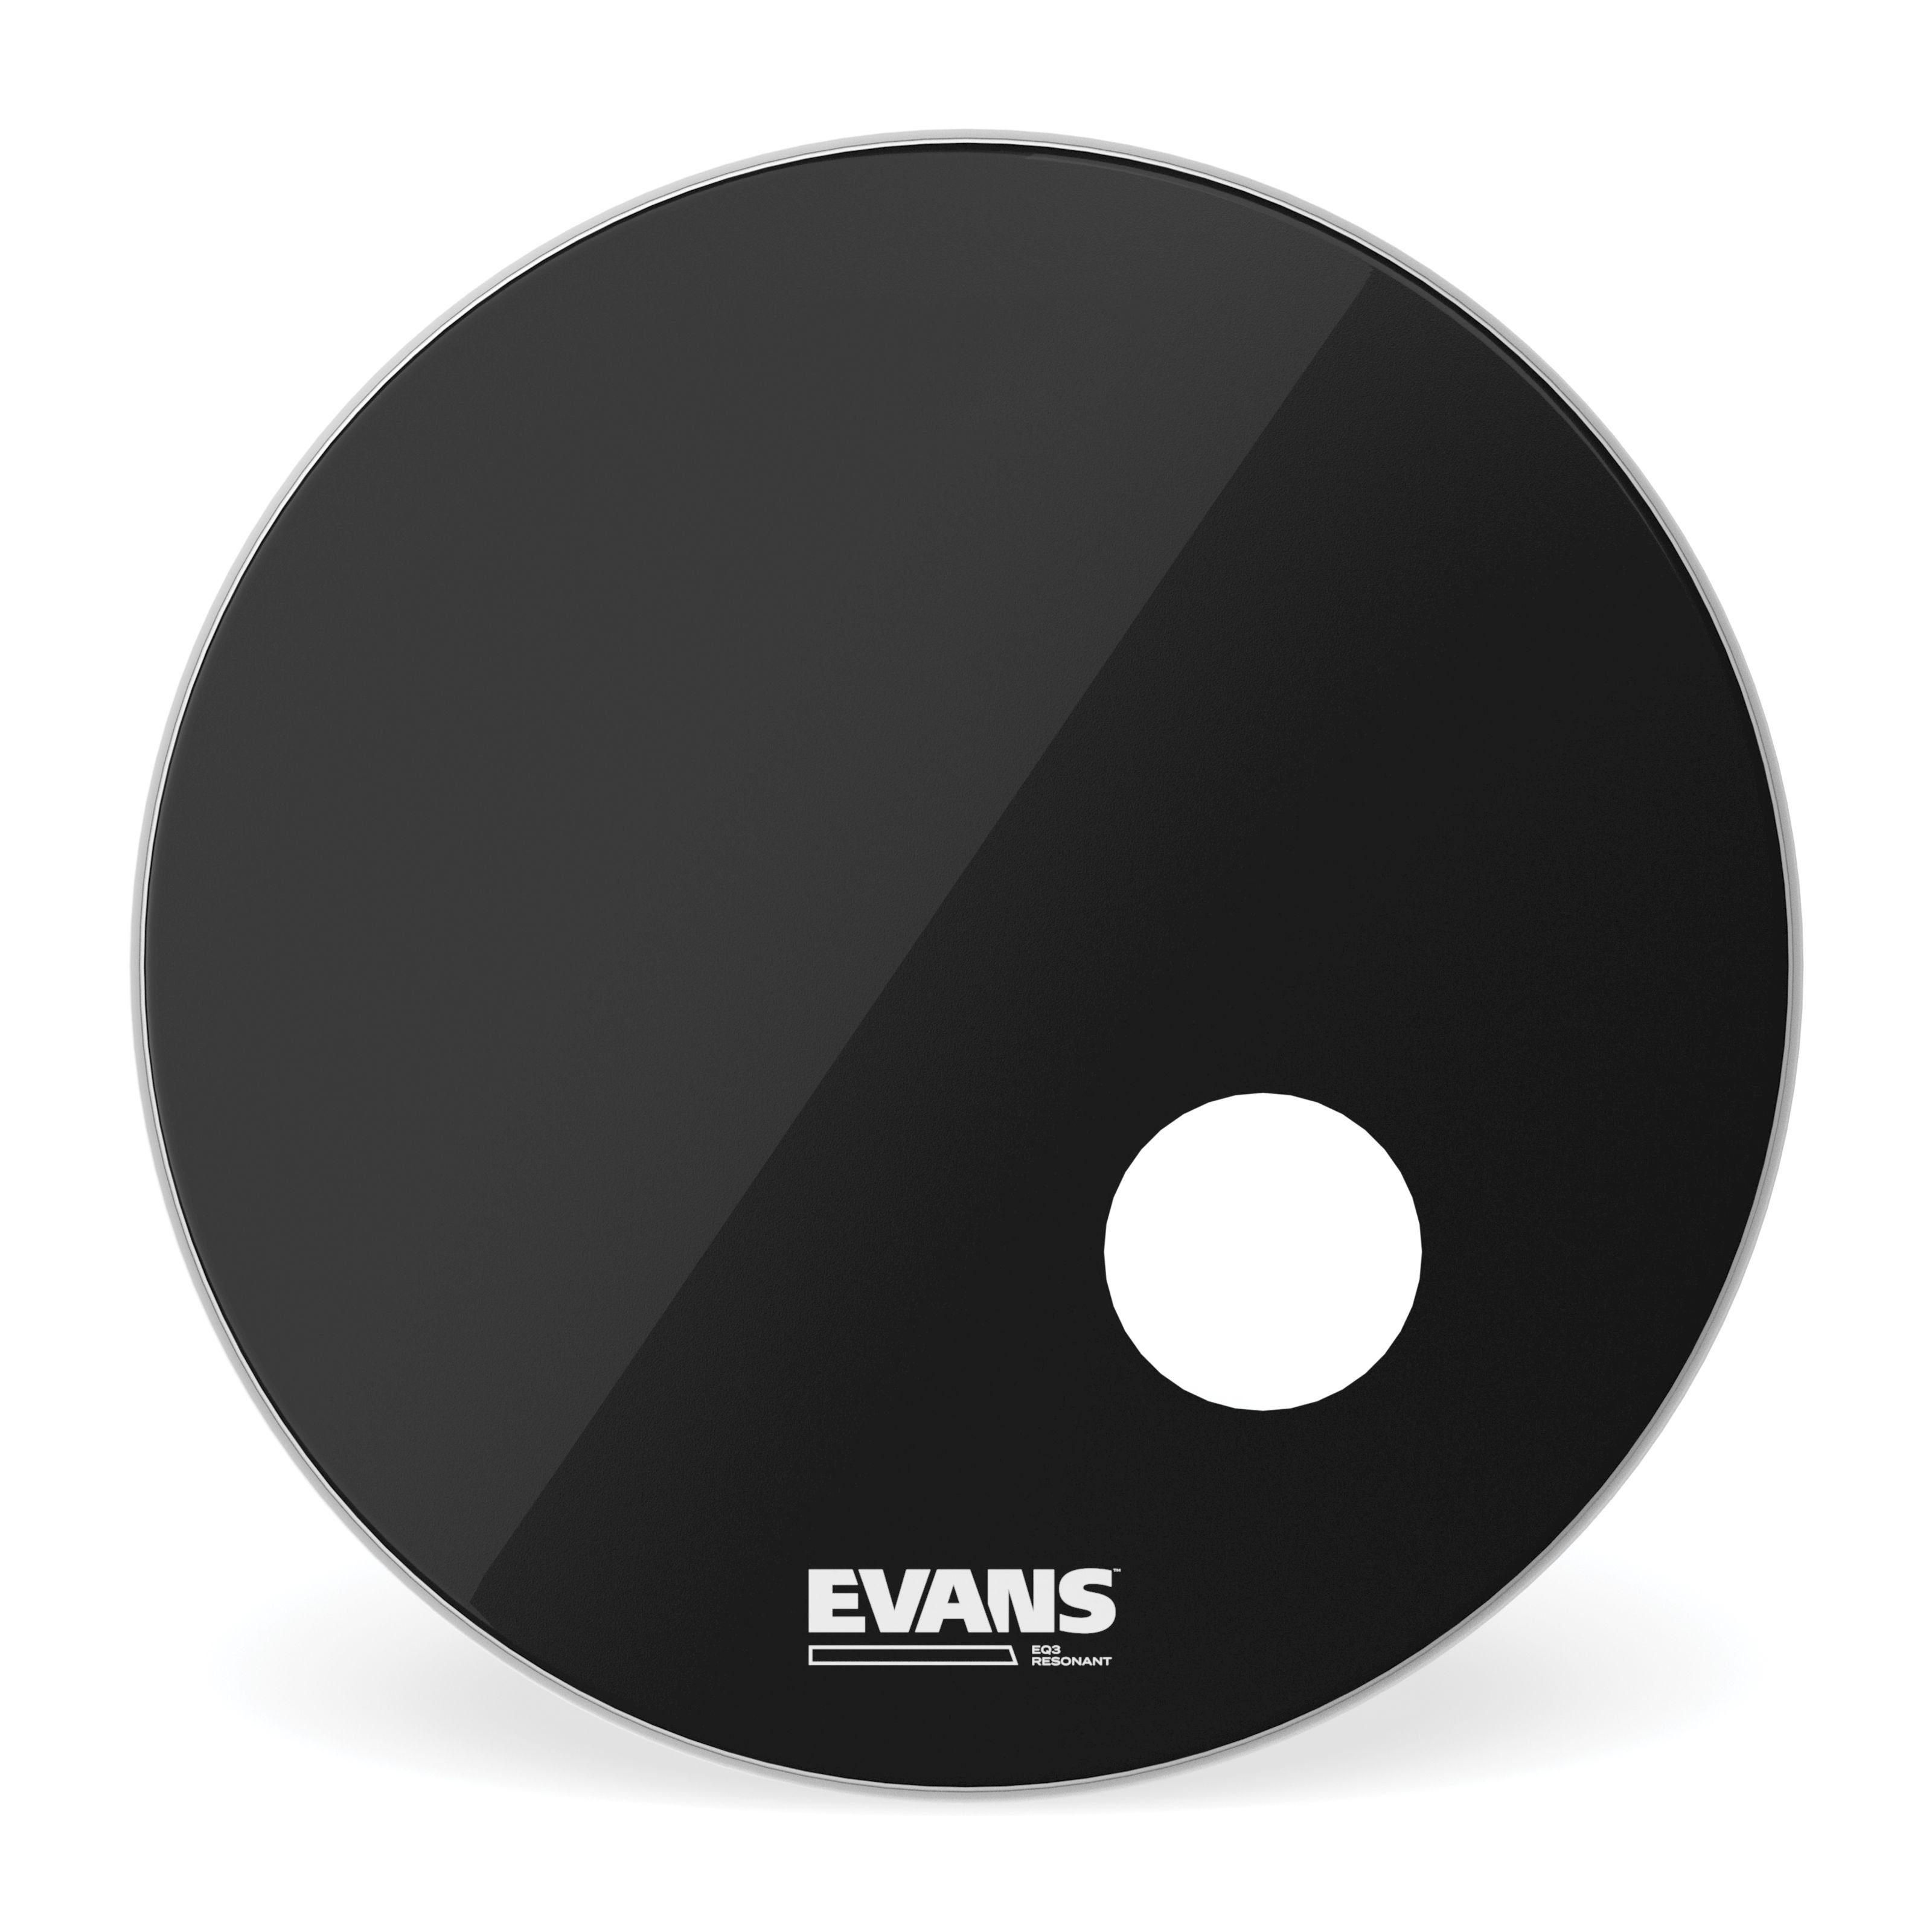 Evans Bass Drum,EQ3 Black 24" BD24RB Bass Drum Reso, Felle, Bass Drum Felle, EQ3 Black 24" BD24RB Bass Drum Reso - Bass Drum Fell